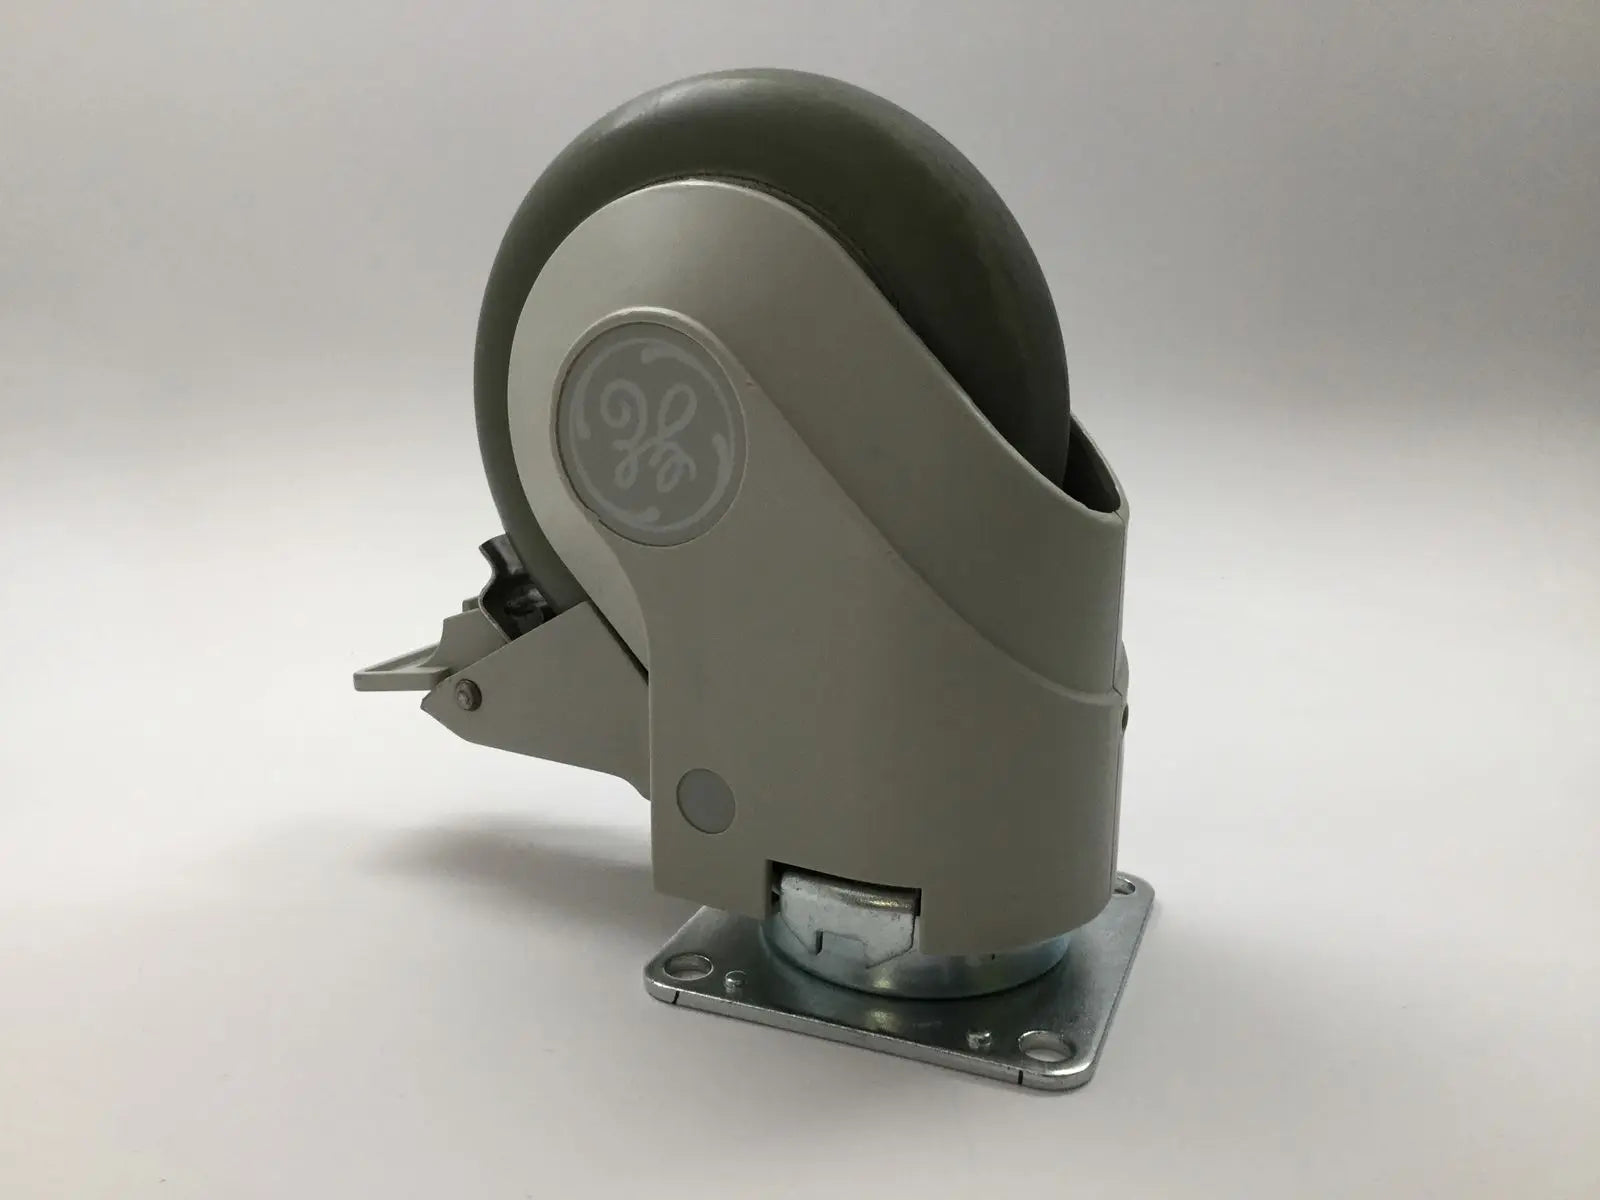 GE Logiq 5 Expert Ultrasound Casters set of 4